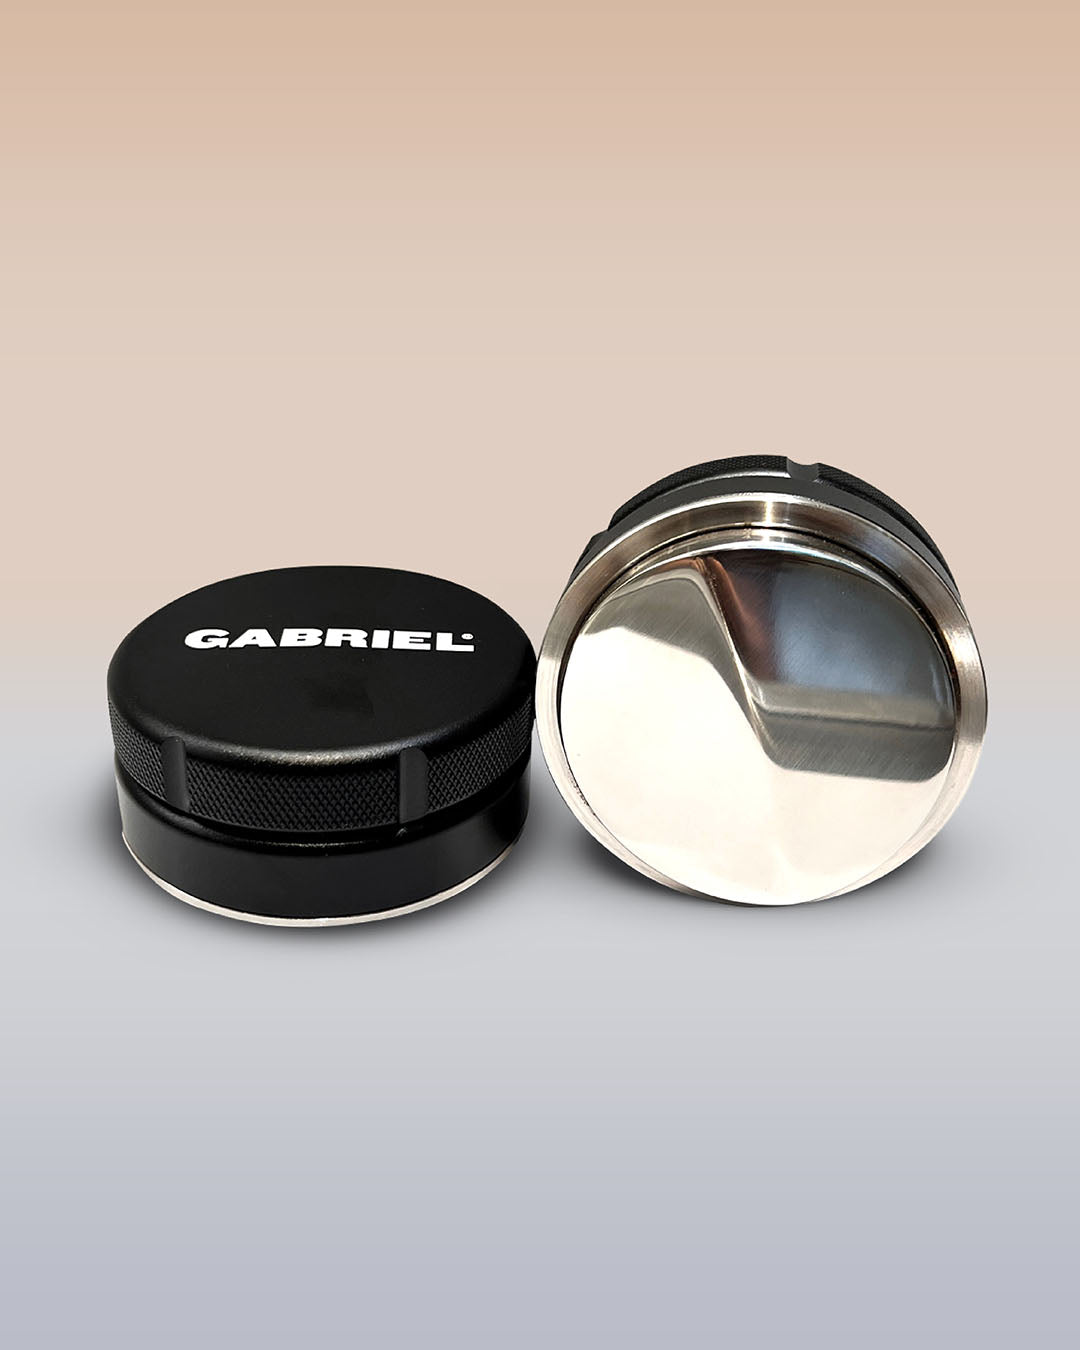 Gabriel Coffee Distribution Tool (58mm)